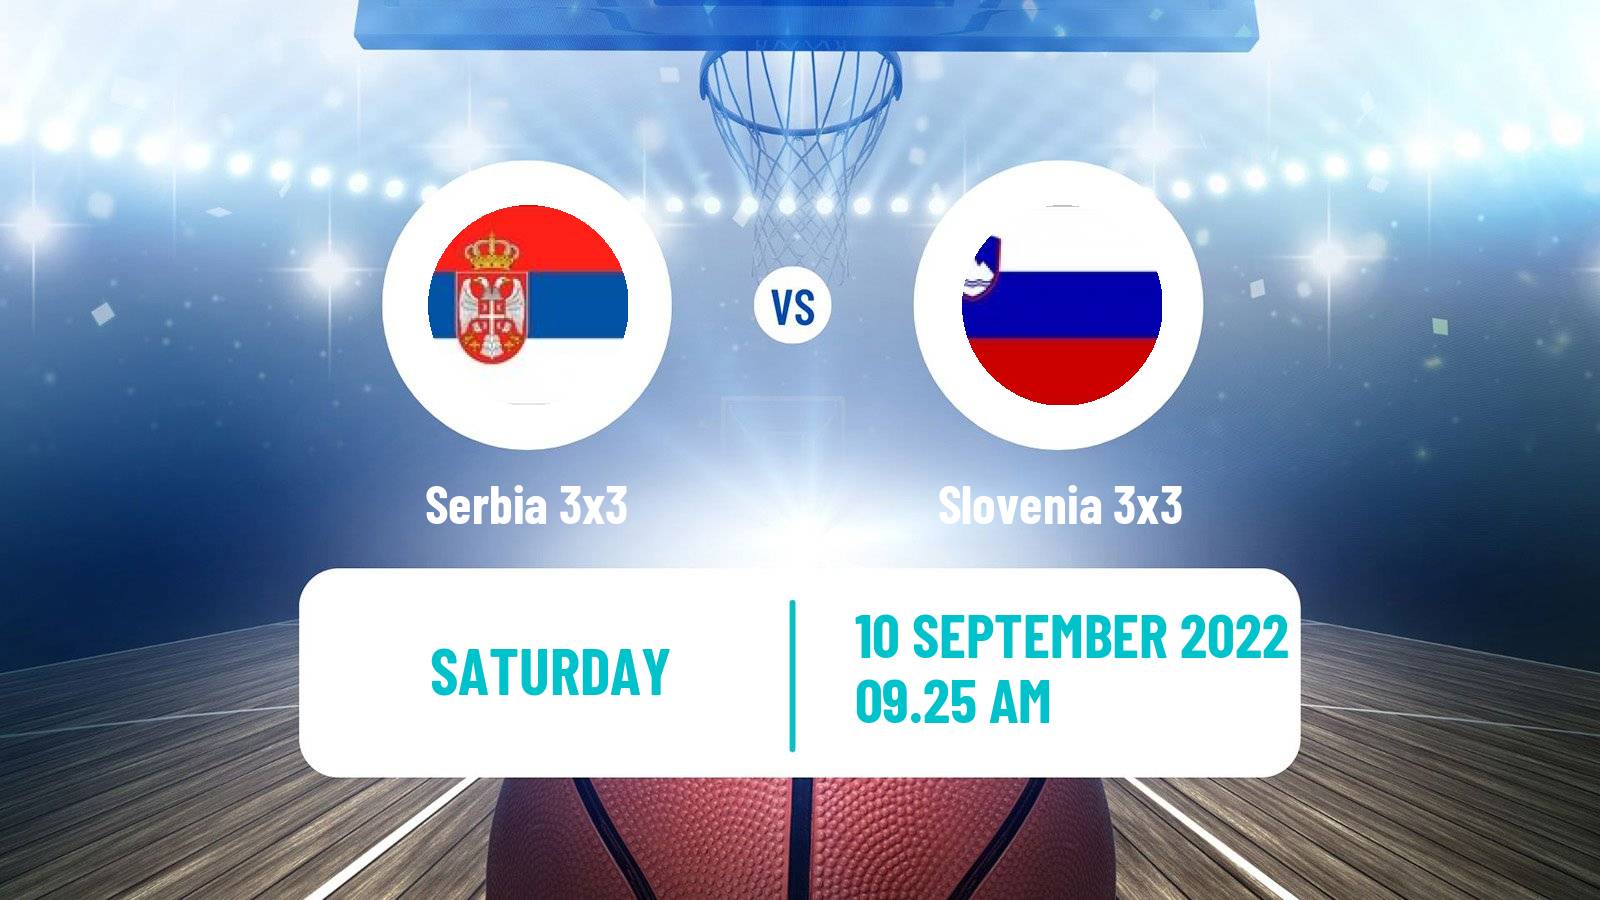 Basketball Europe Cup Basketball 3x3 Serbia 3x3 - Slovenia 3x3